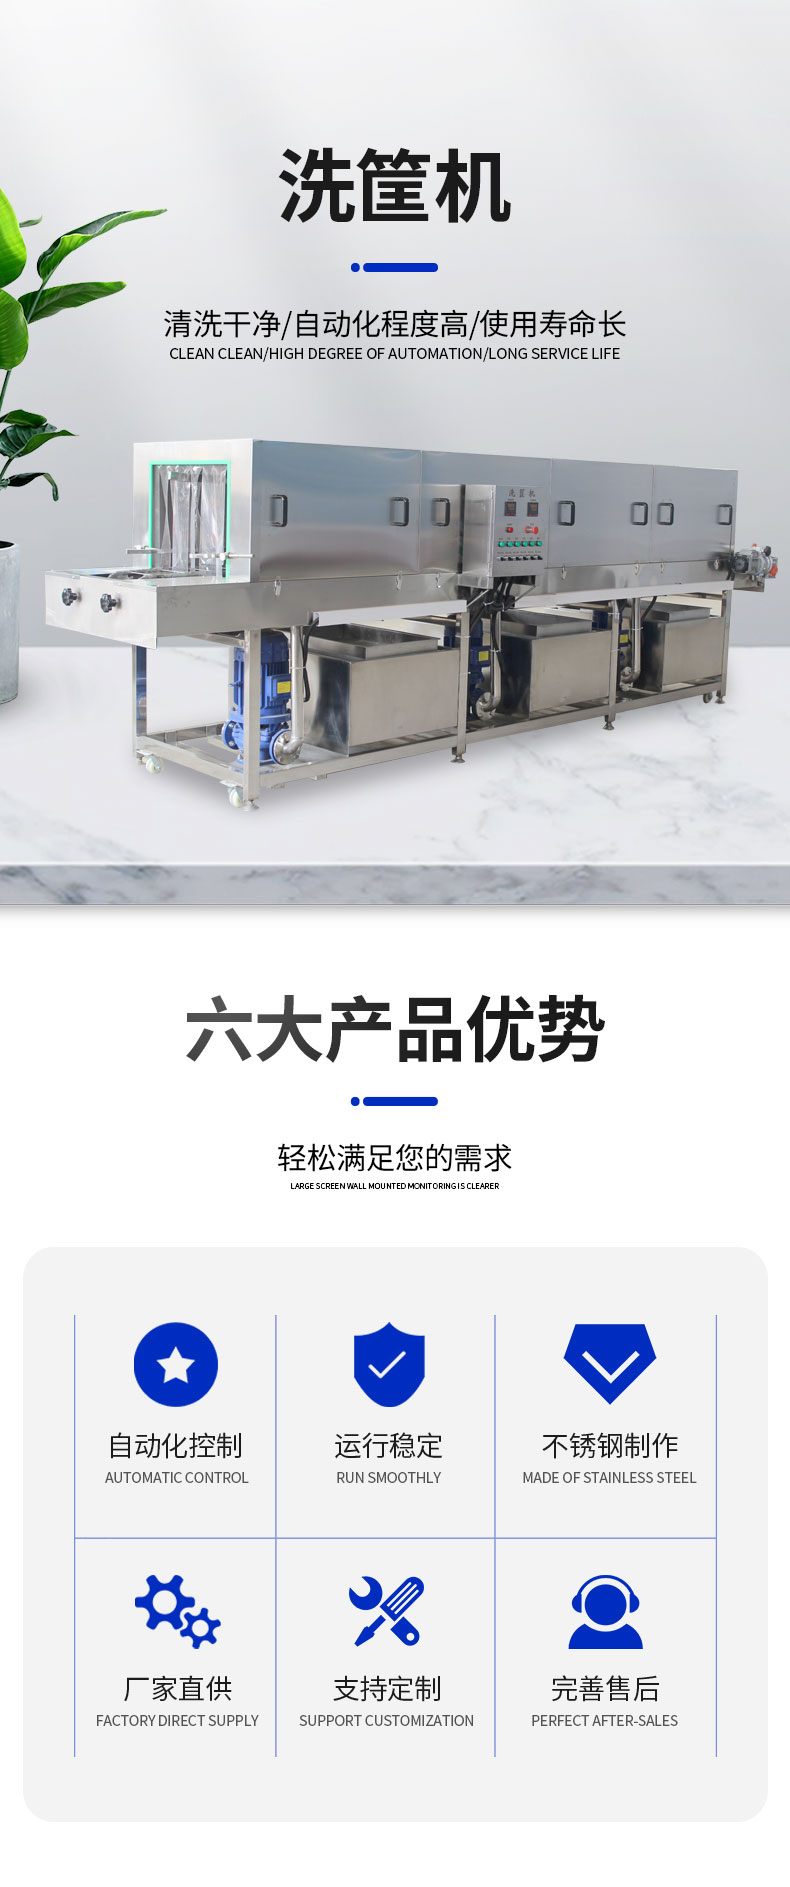 Jingxiang Brand Bean Products Turnover Basket Washing Machine Storage Box Washing Machine Fully Automatic Spray Washing Machine